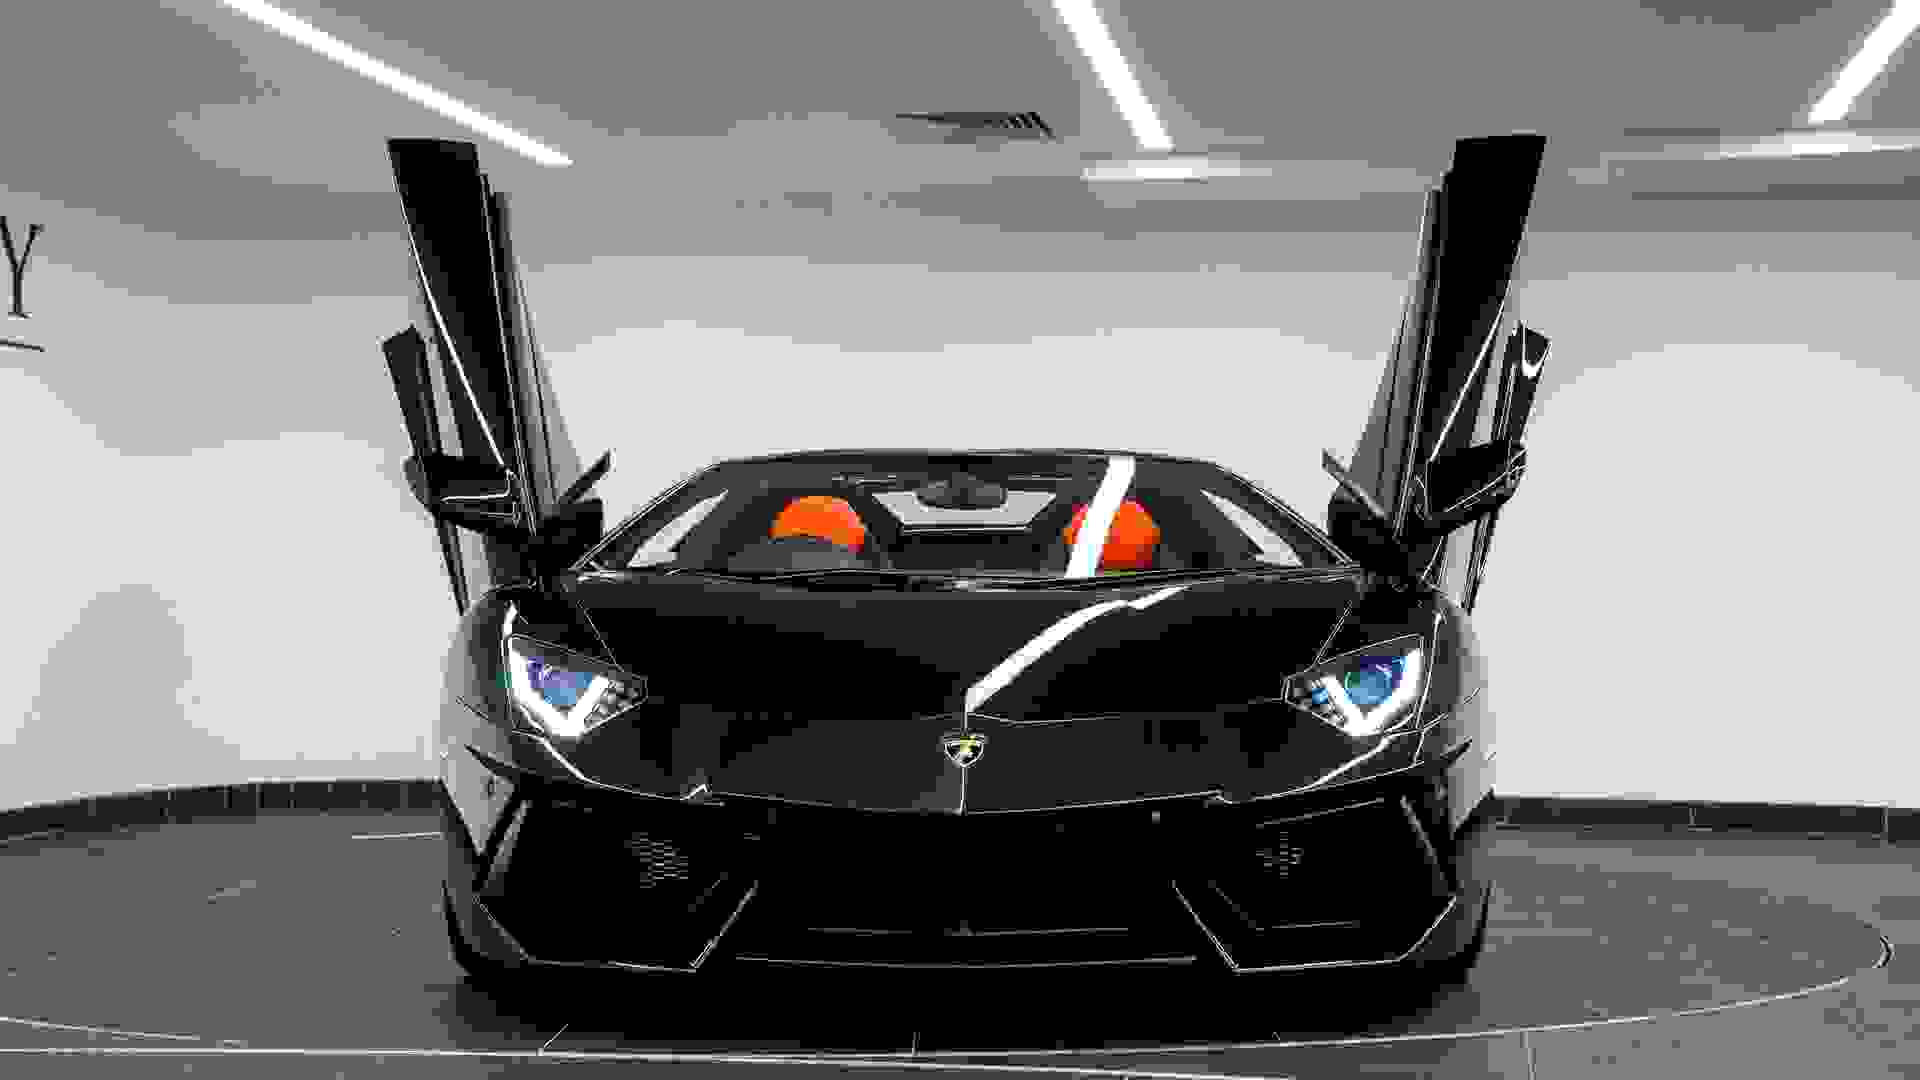 Lamborghini Aventador Photo becbb7e1-6391-4015-8f52-bb6af5c0600e.jpg